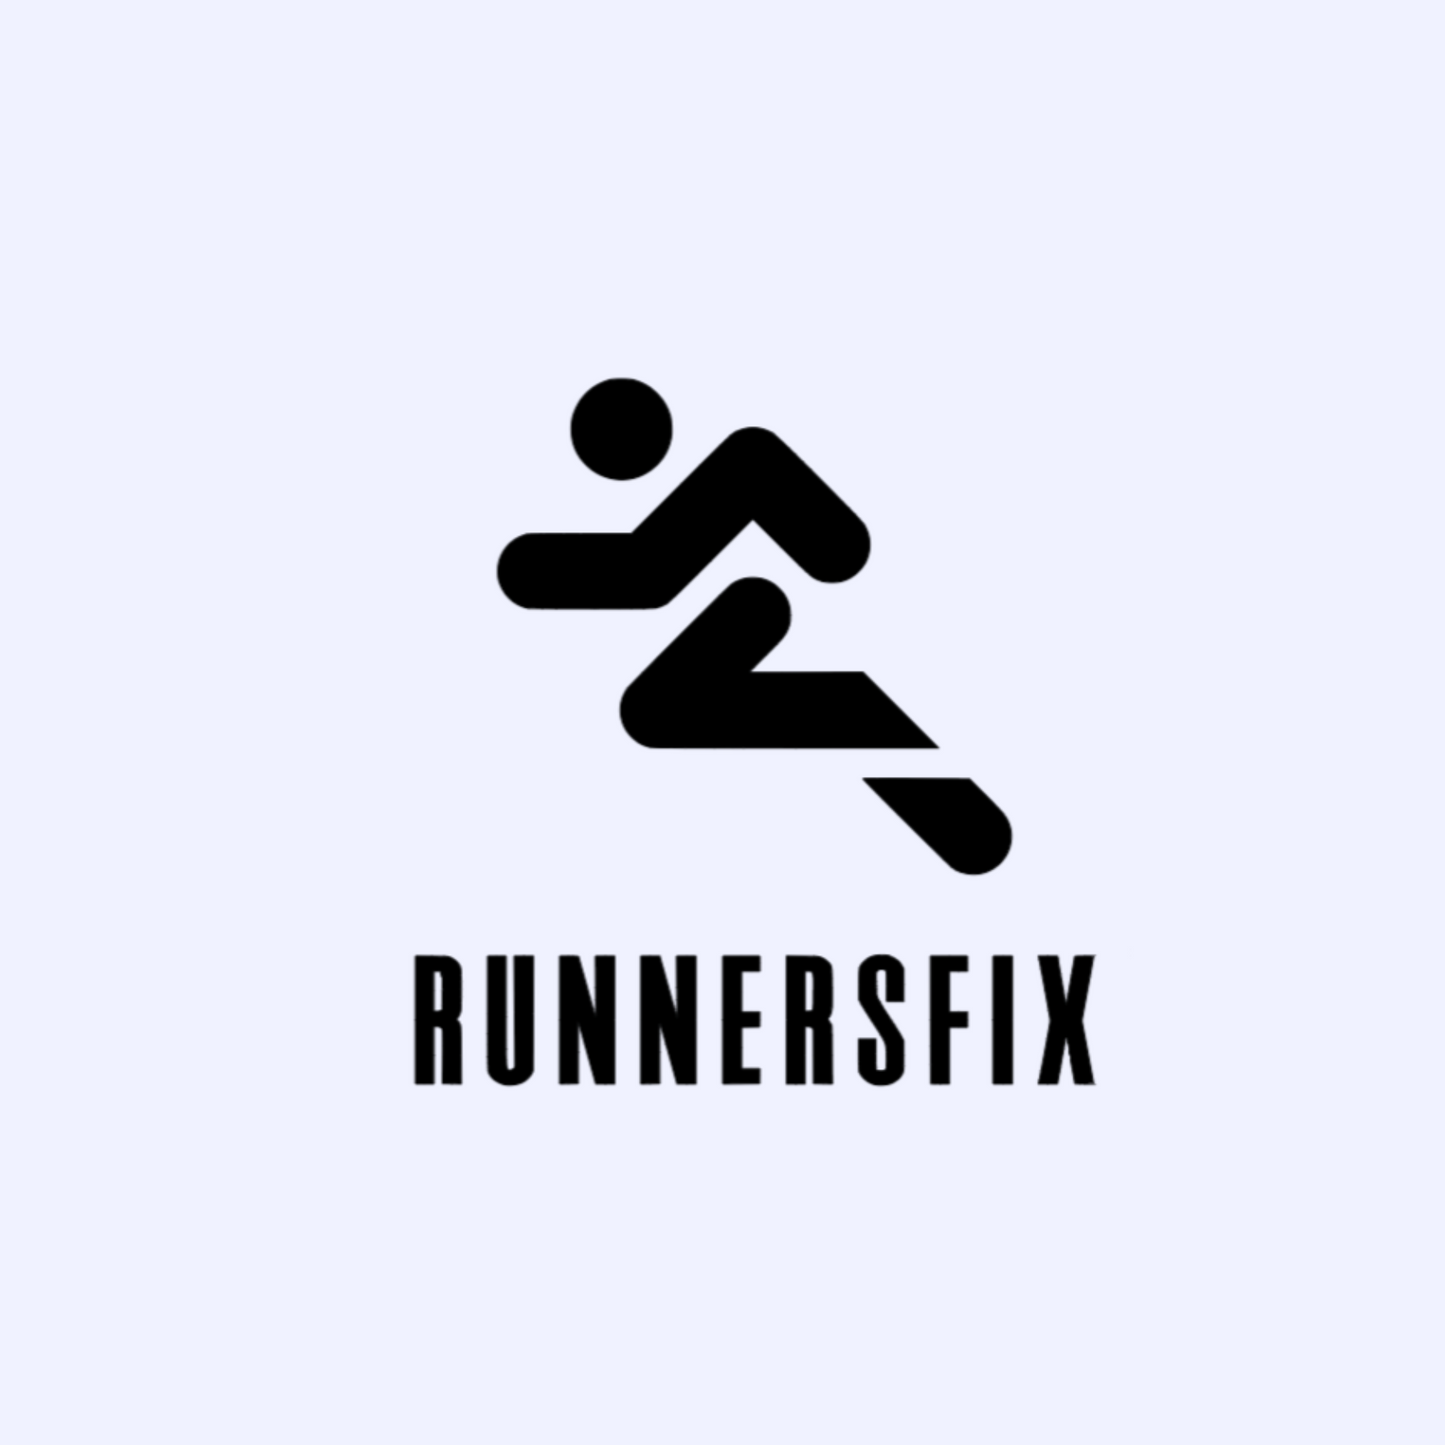 Runnersfix Vinyl Decal 3.5 x 3.5 Inches